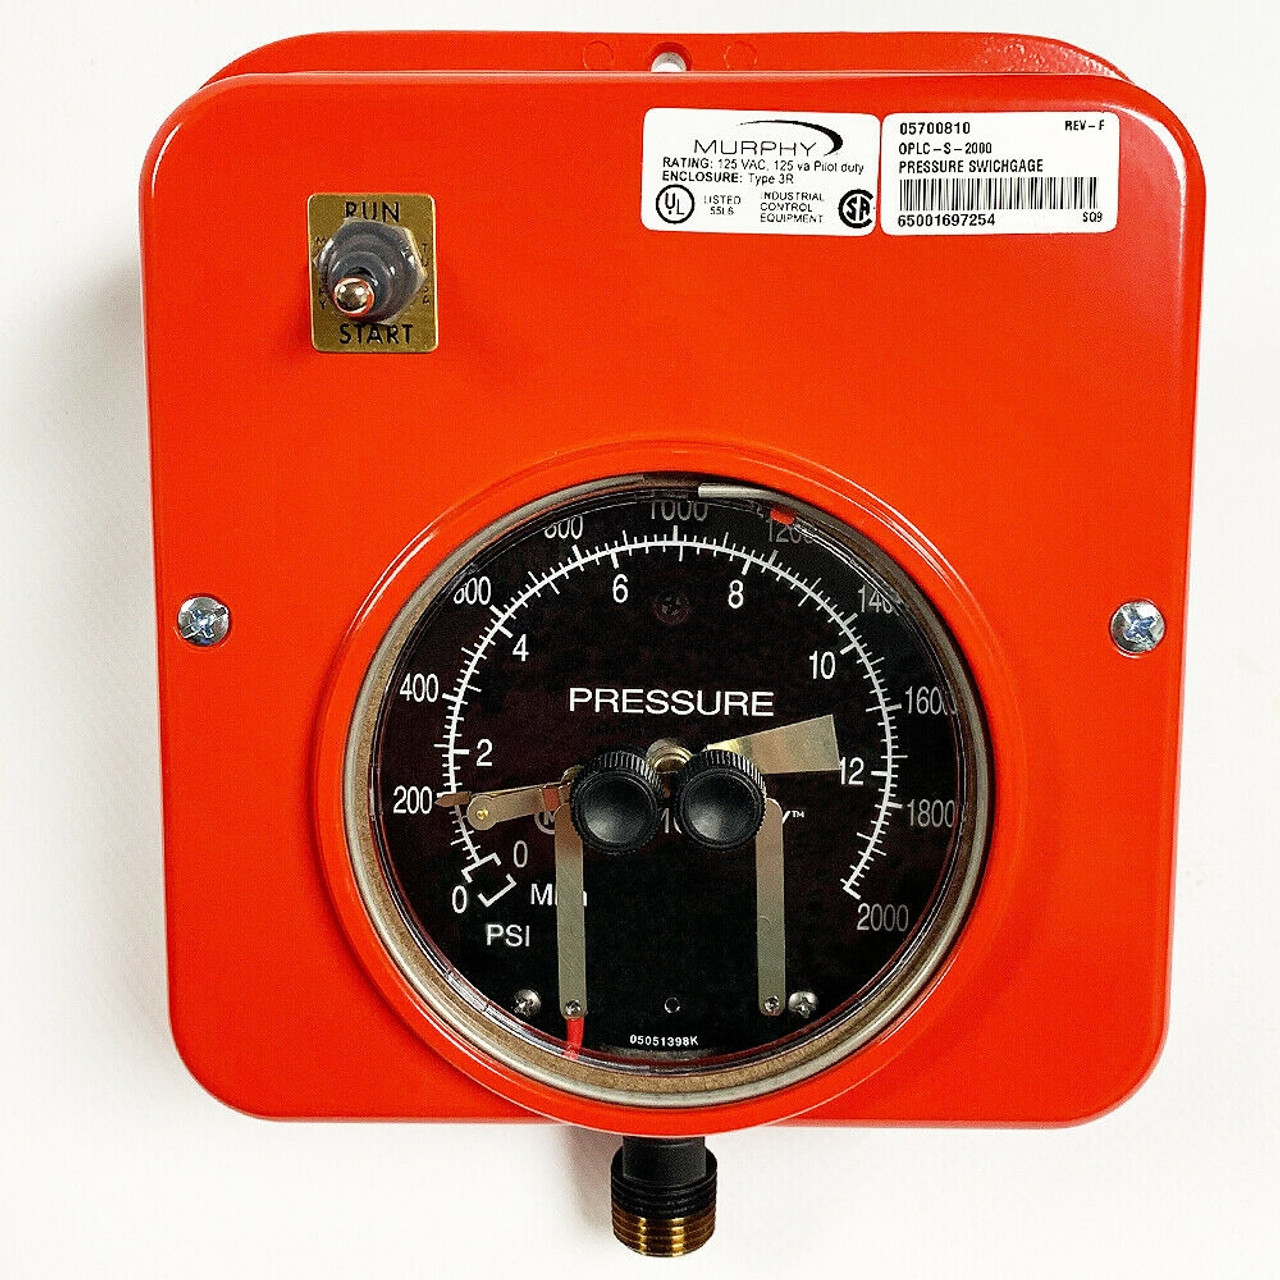 High Pressure Gauge: 0-1500 psi.